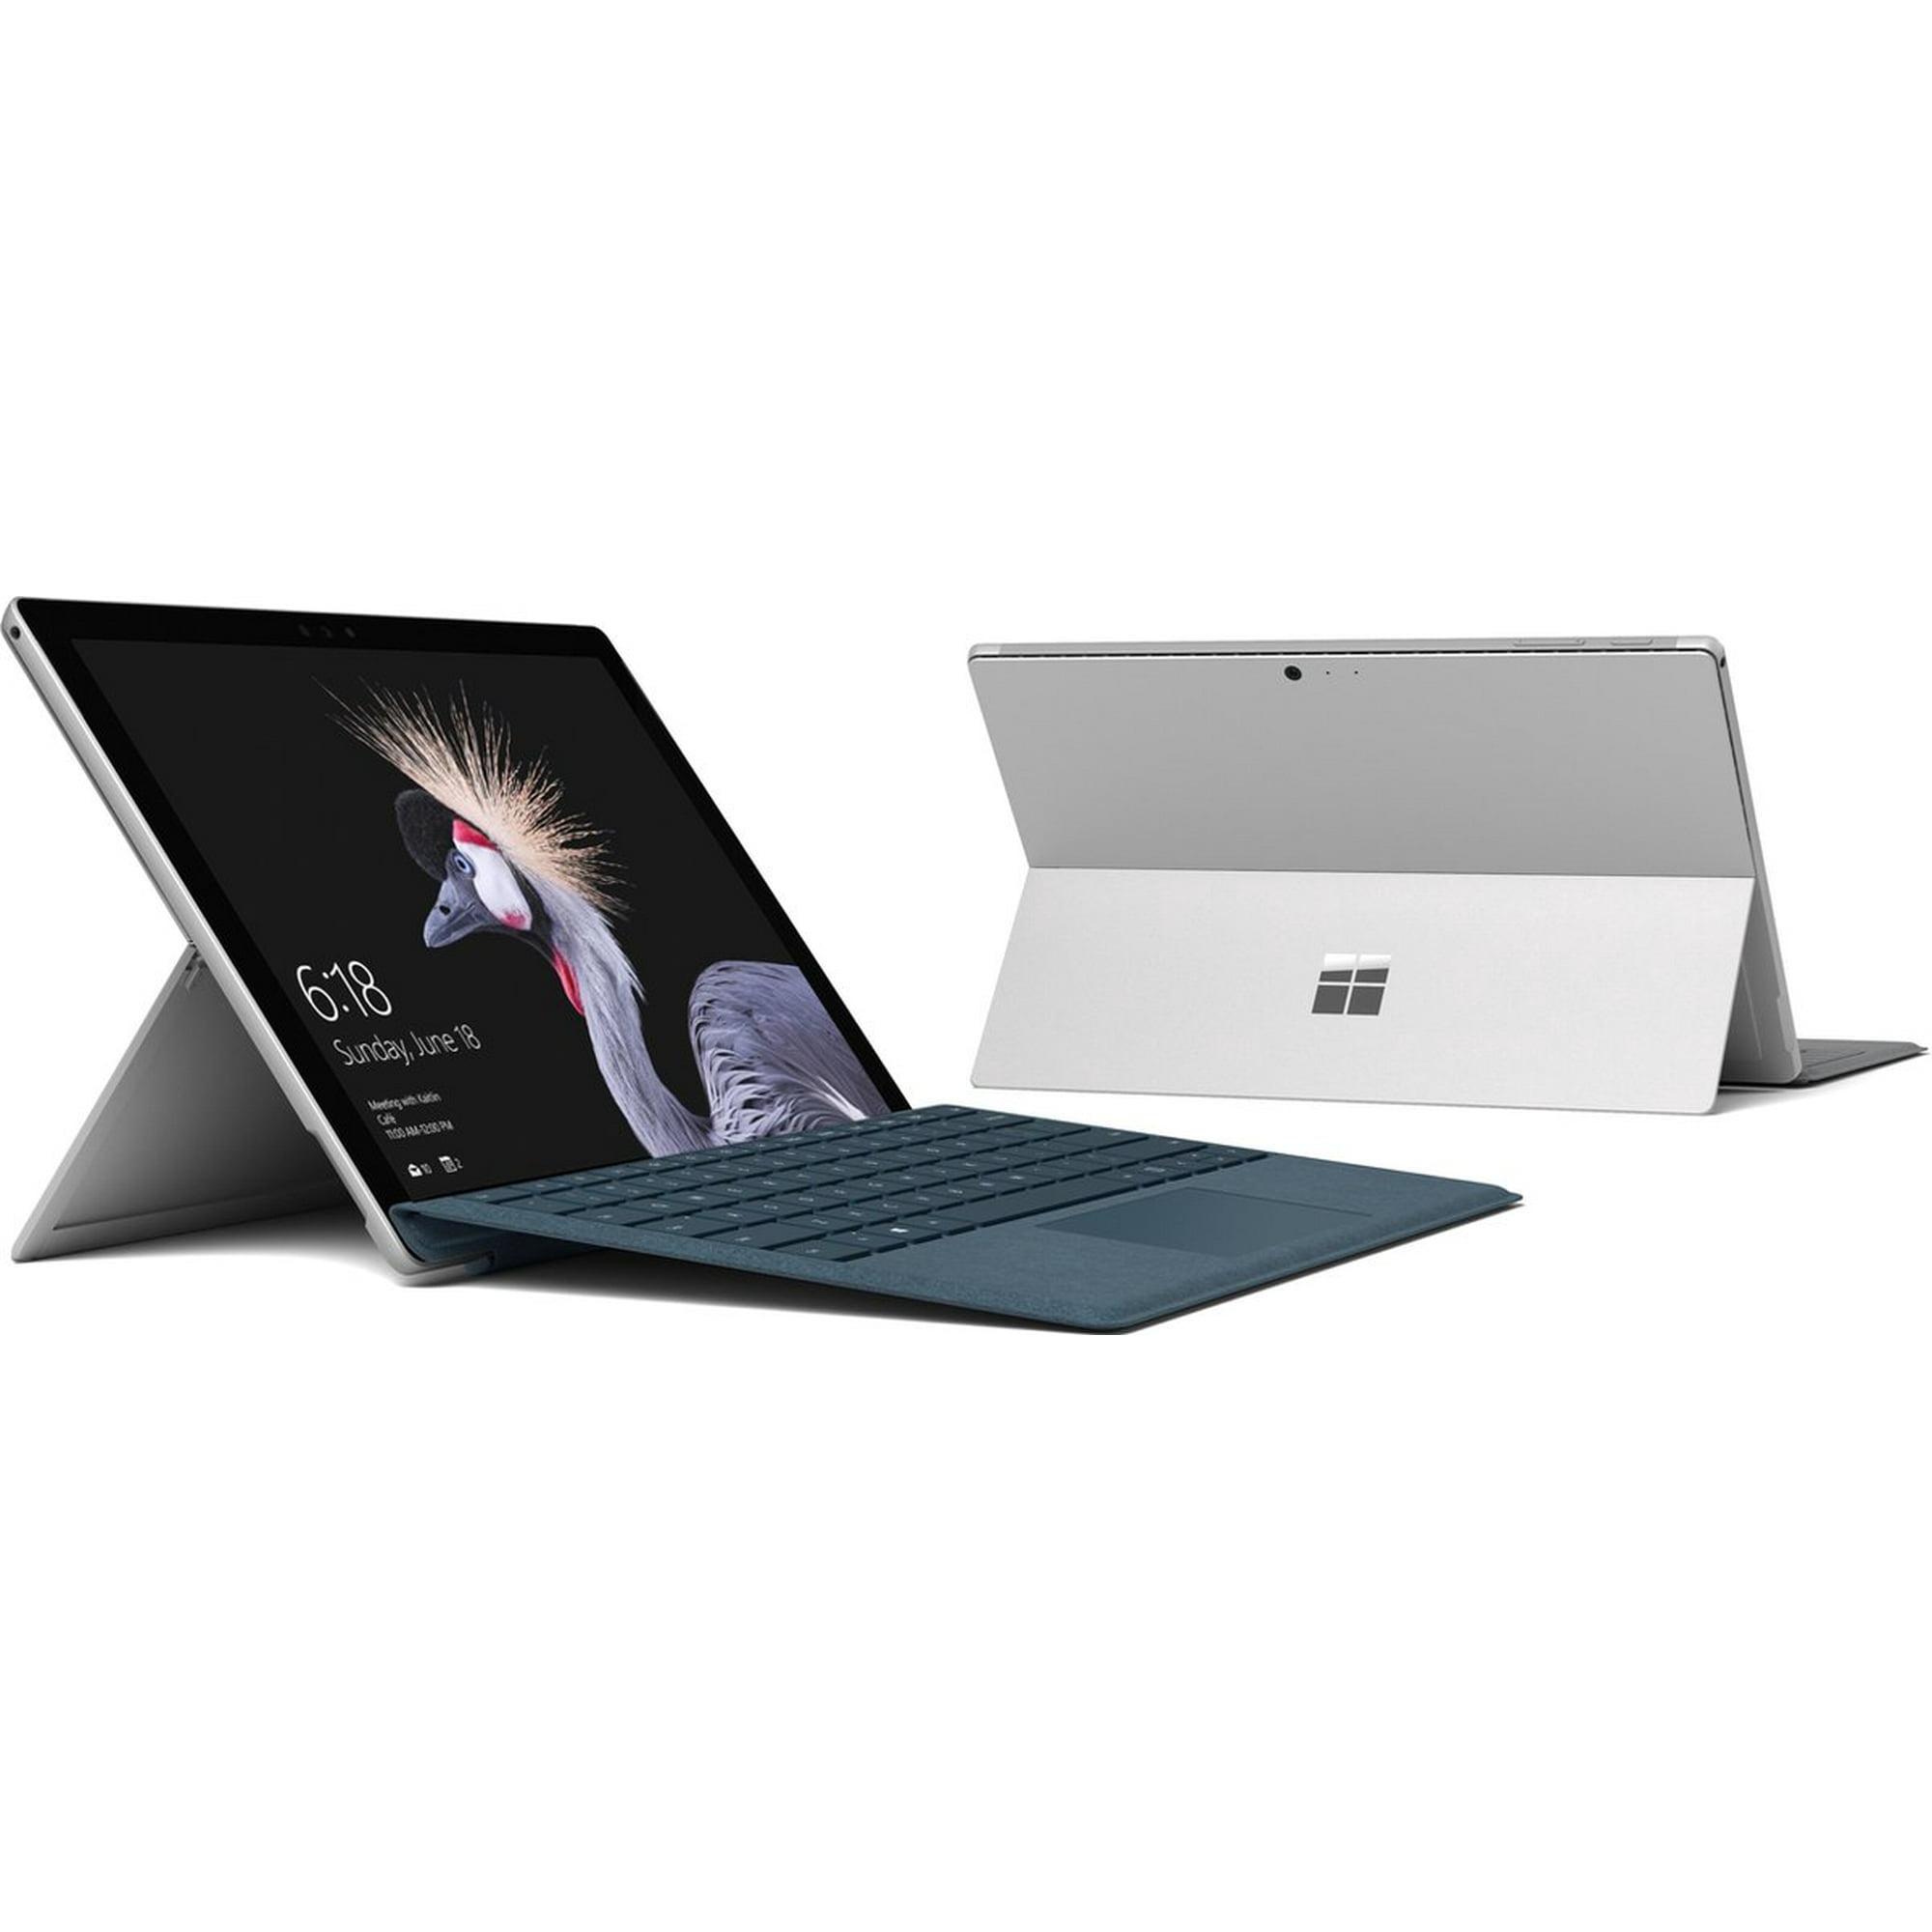 Trin tempereret kantsten Microsoft Surface Pro 4 Touchscreen Laptop Intel Core i5-6300U 2.40GHz, RAM  8 GB, 256 GB SSD, GPU: Intel HD Graphics 520 (Used) - Walmart.com